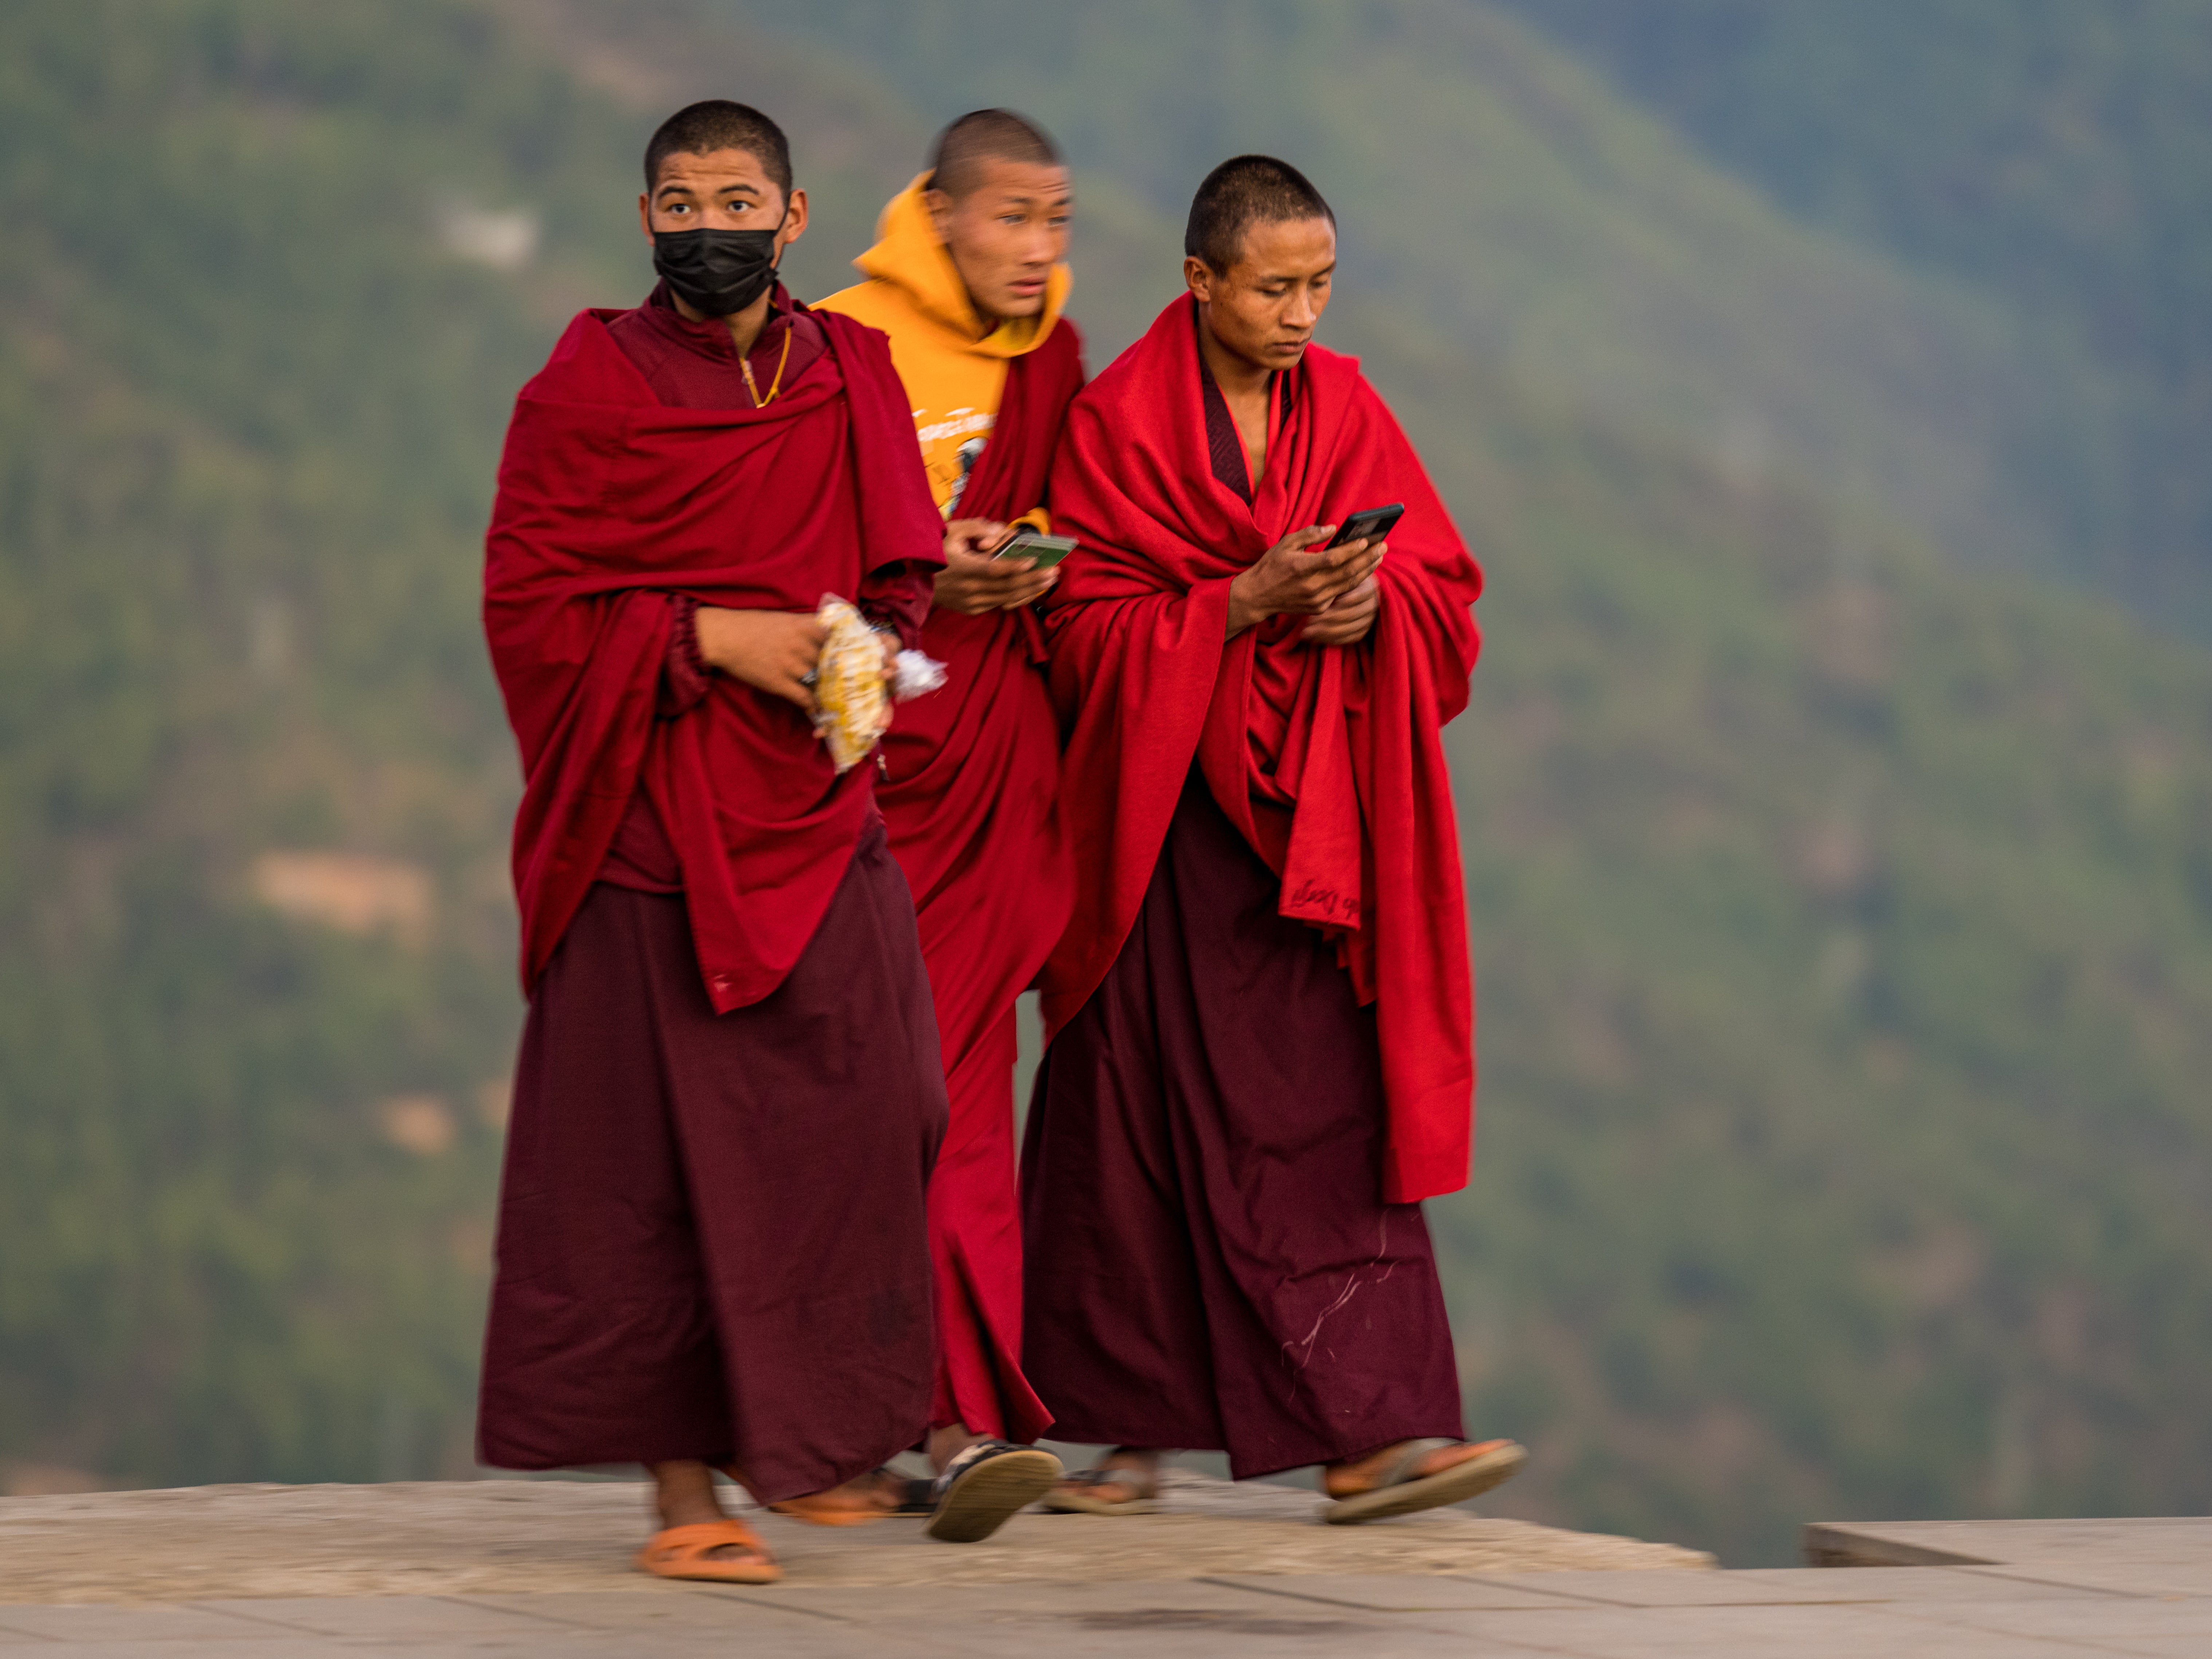 Modernity meets tradition in Bhutan